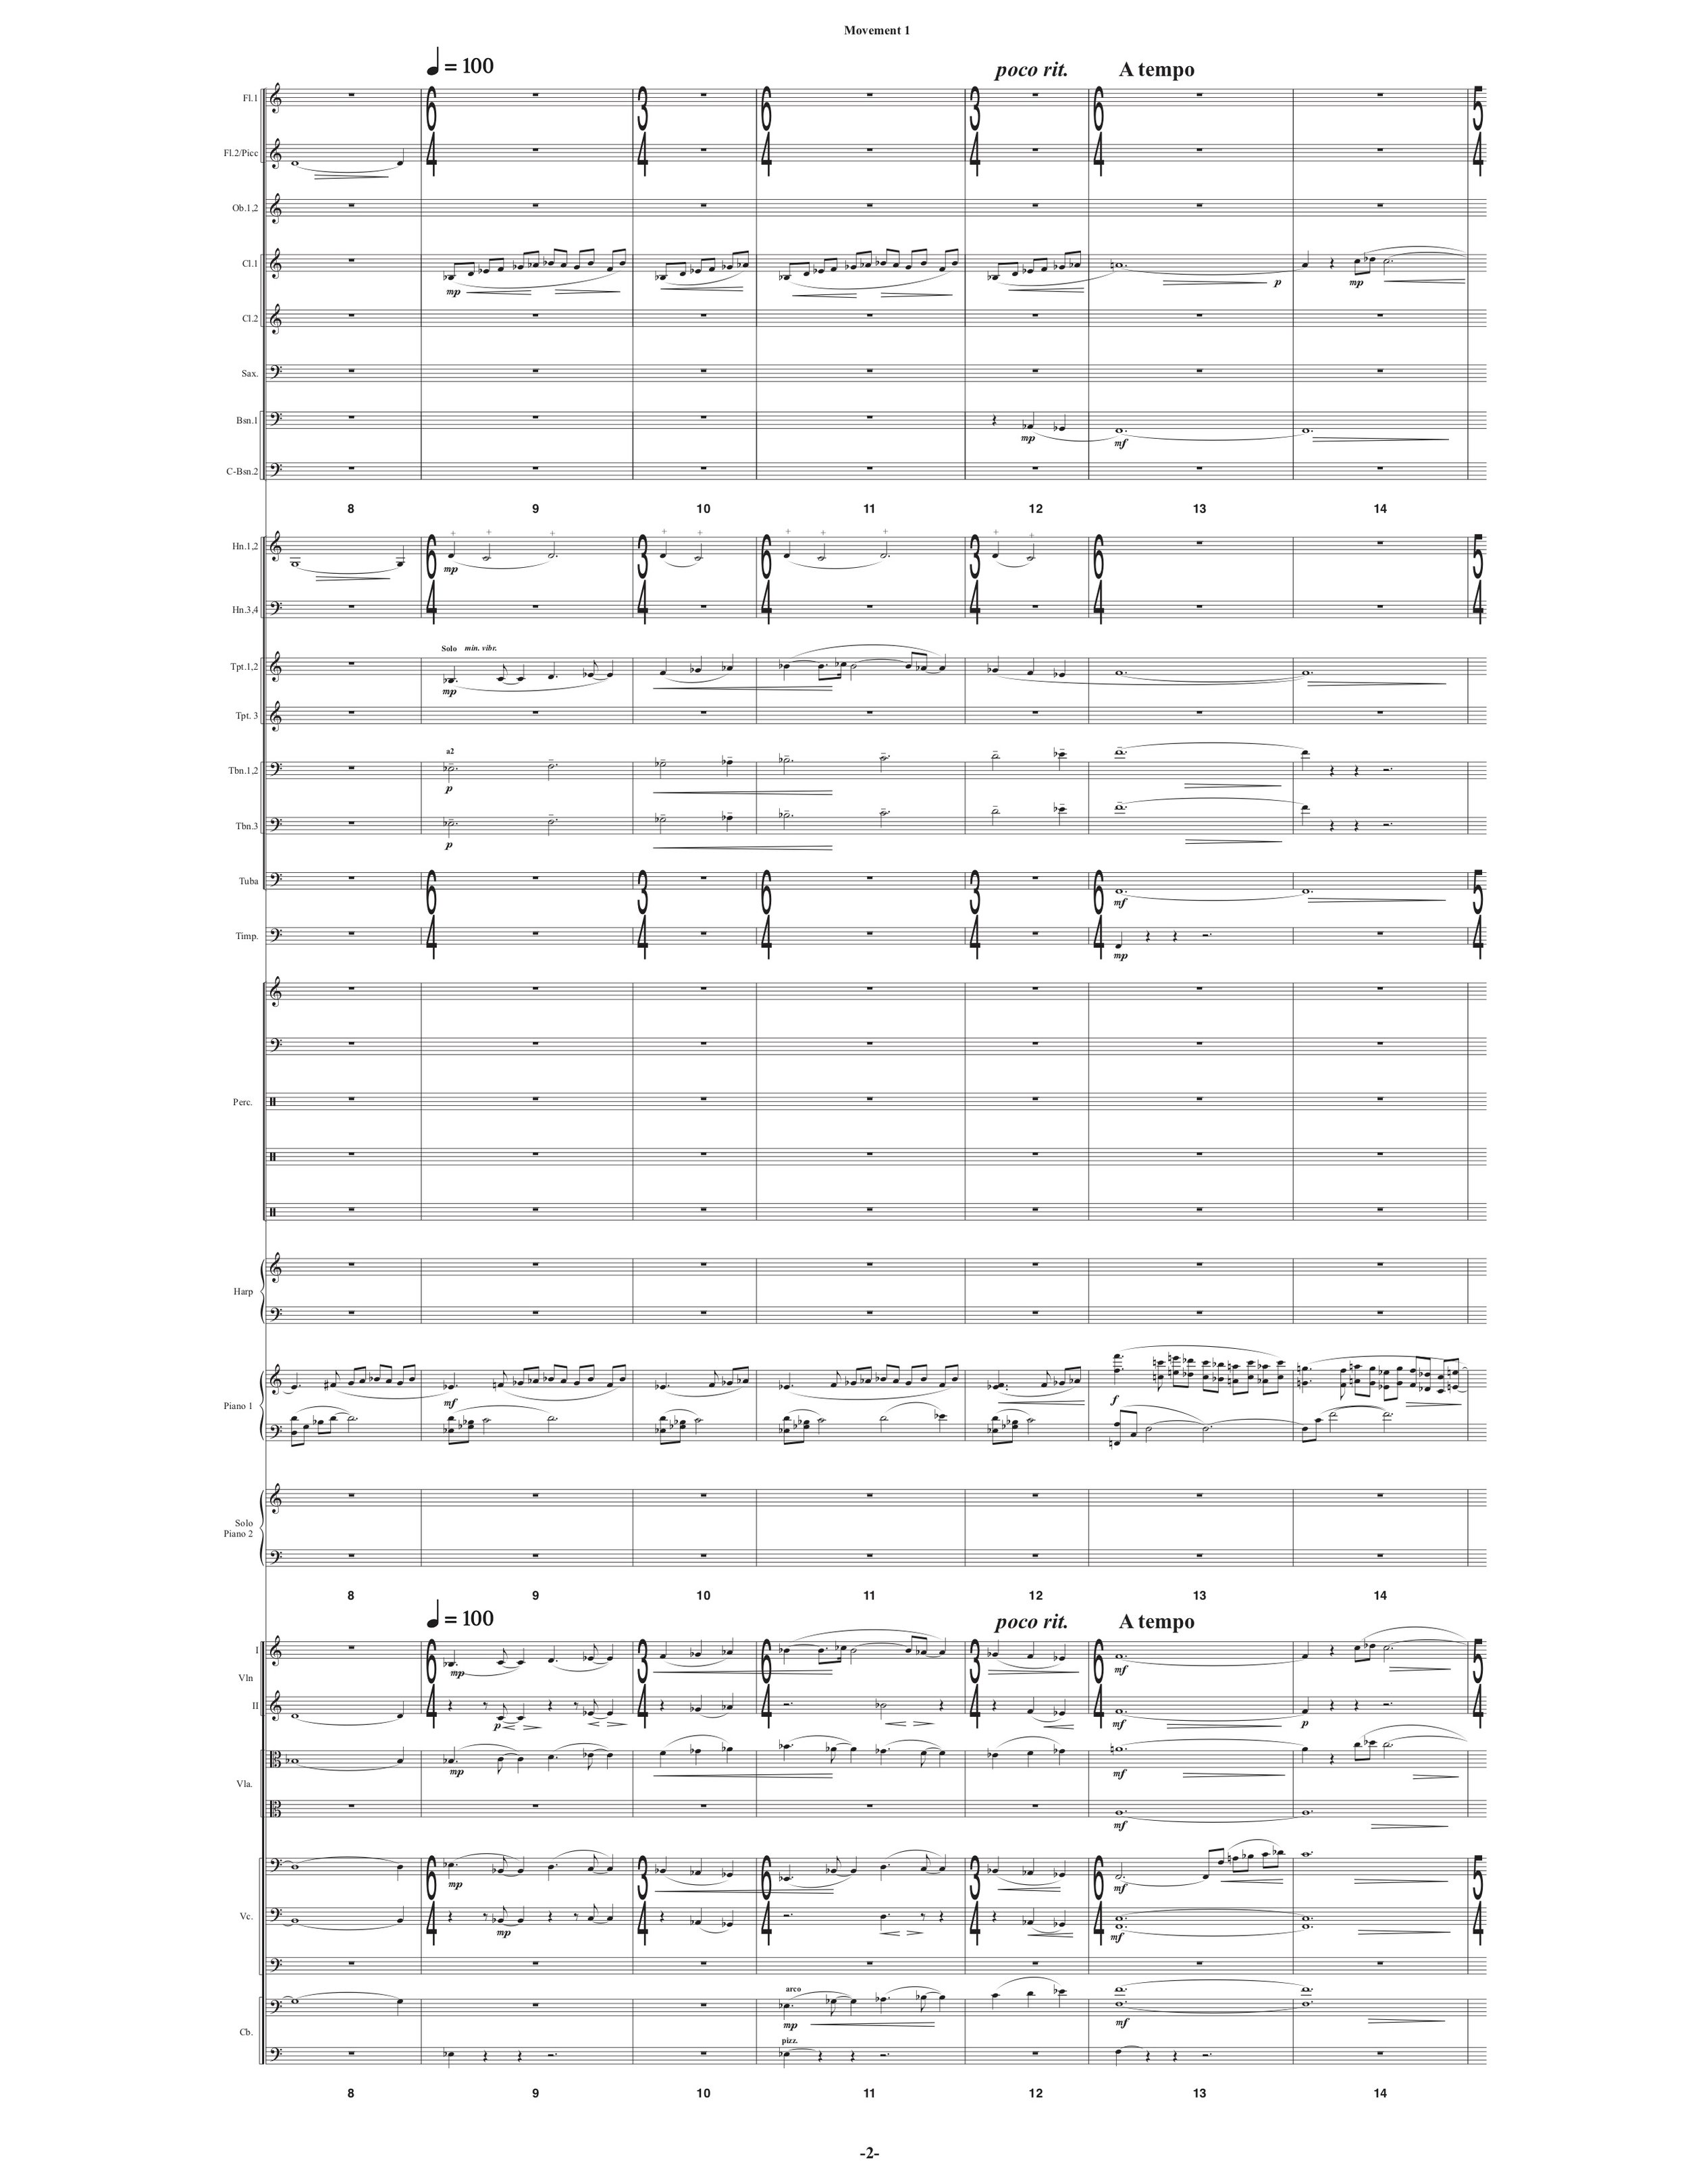 Symphony_Orch & 2 Pianos p7.jpg